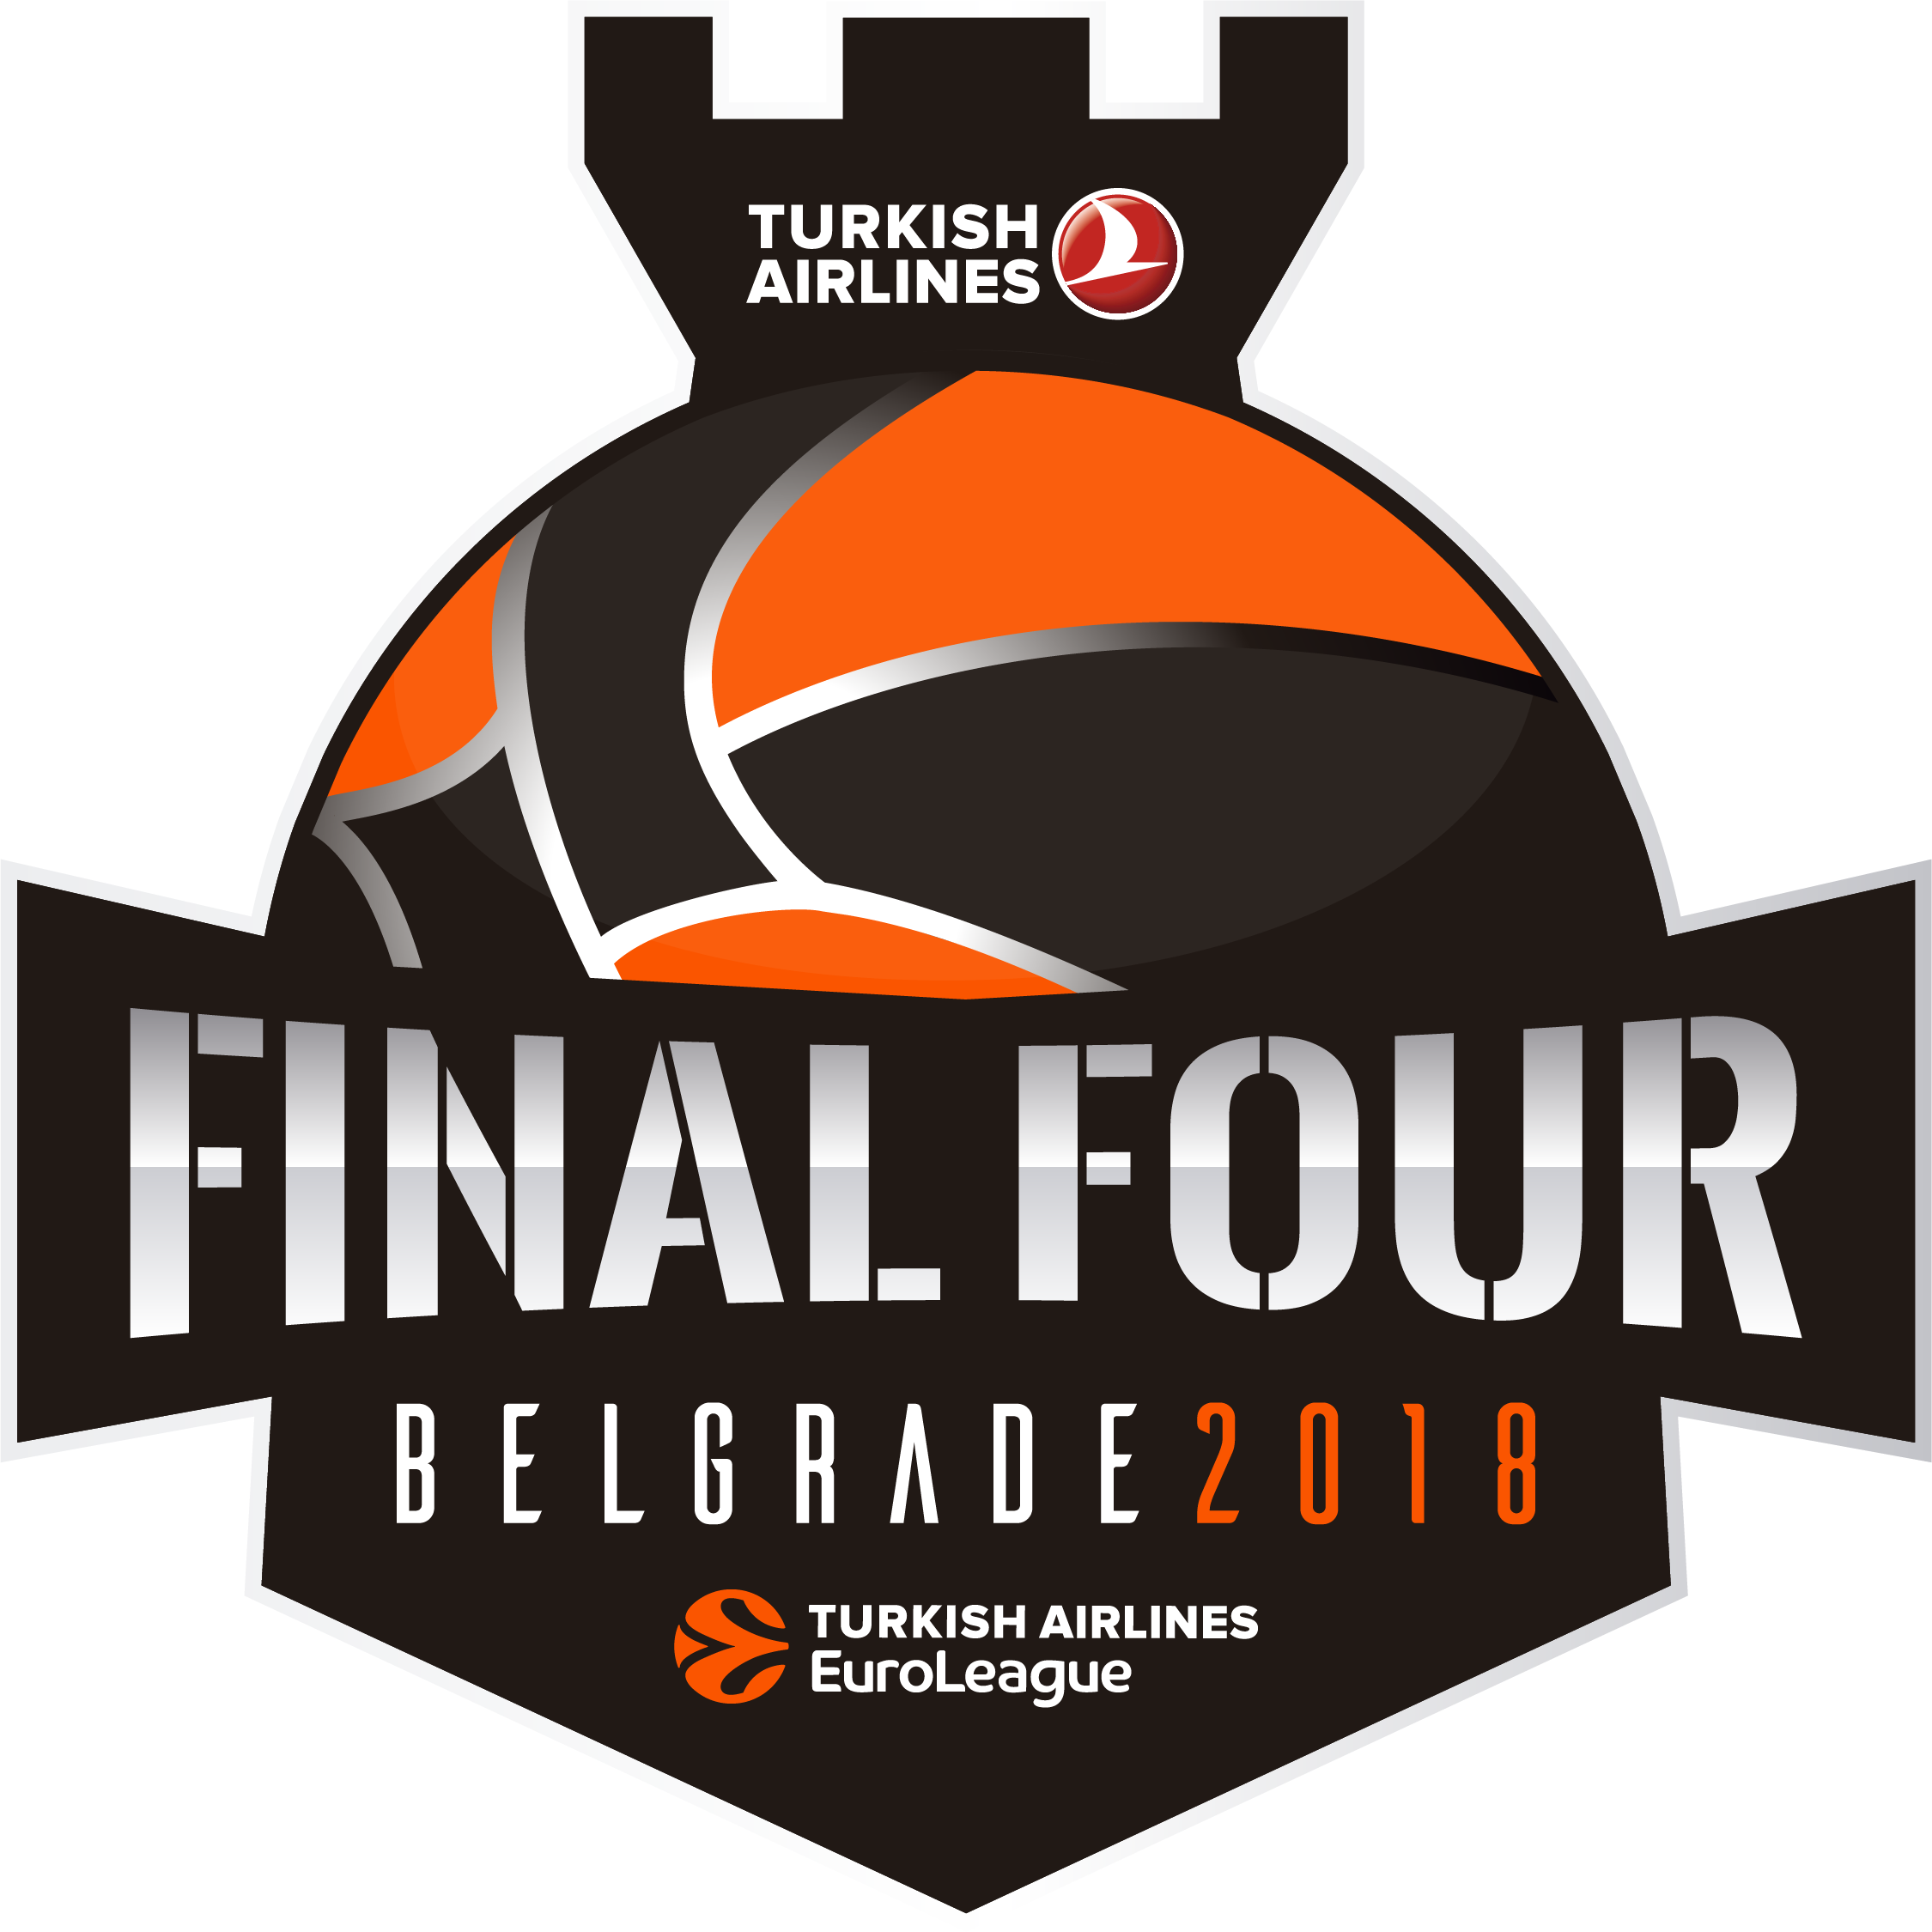 It's Euroleague Final Four Logo reveal day BallinEurope